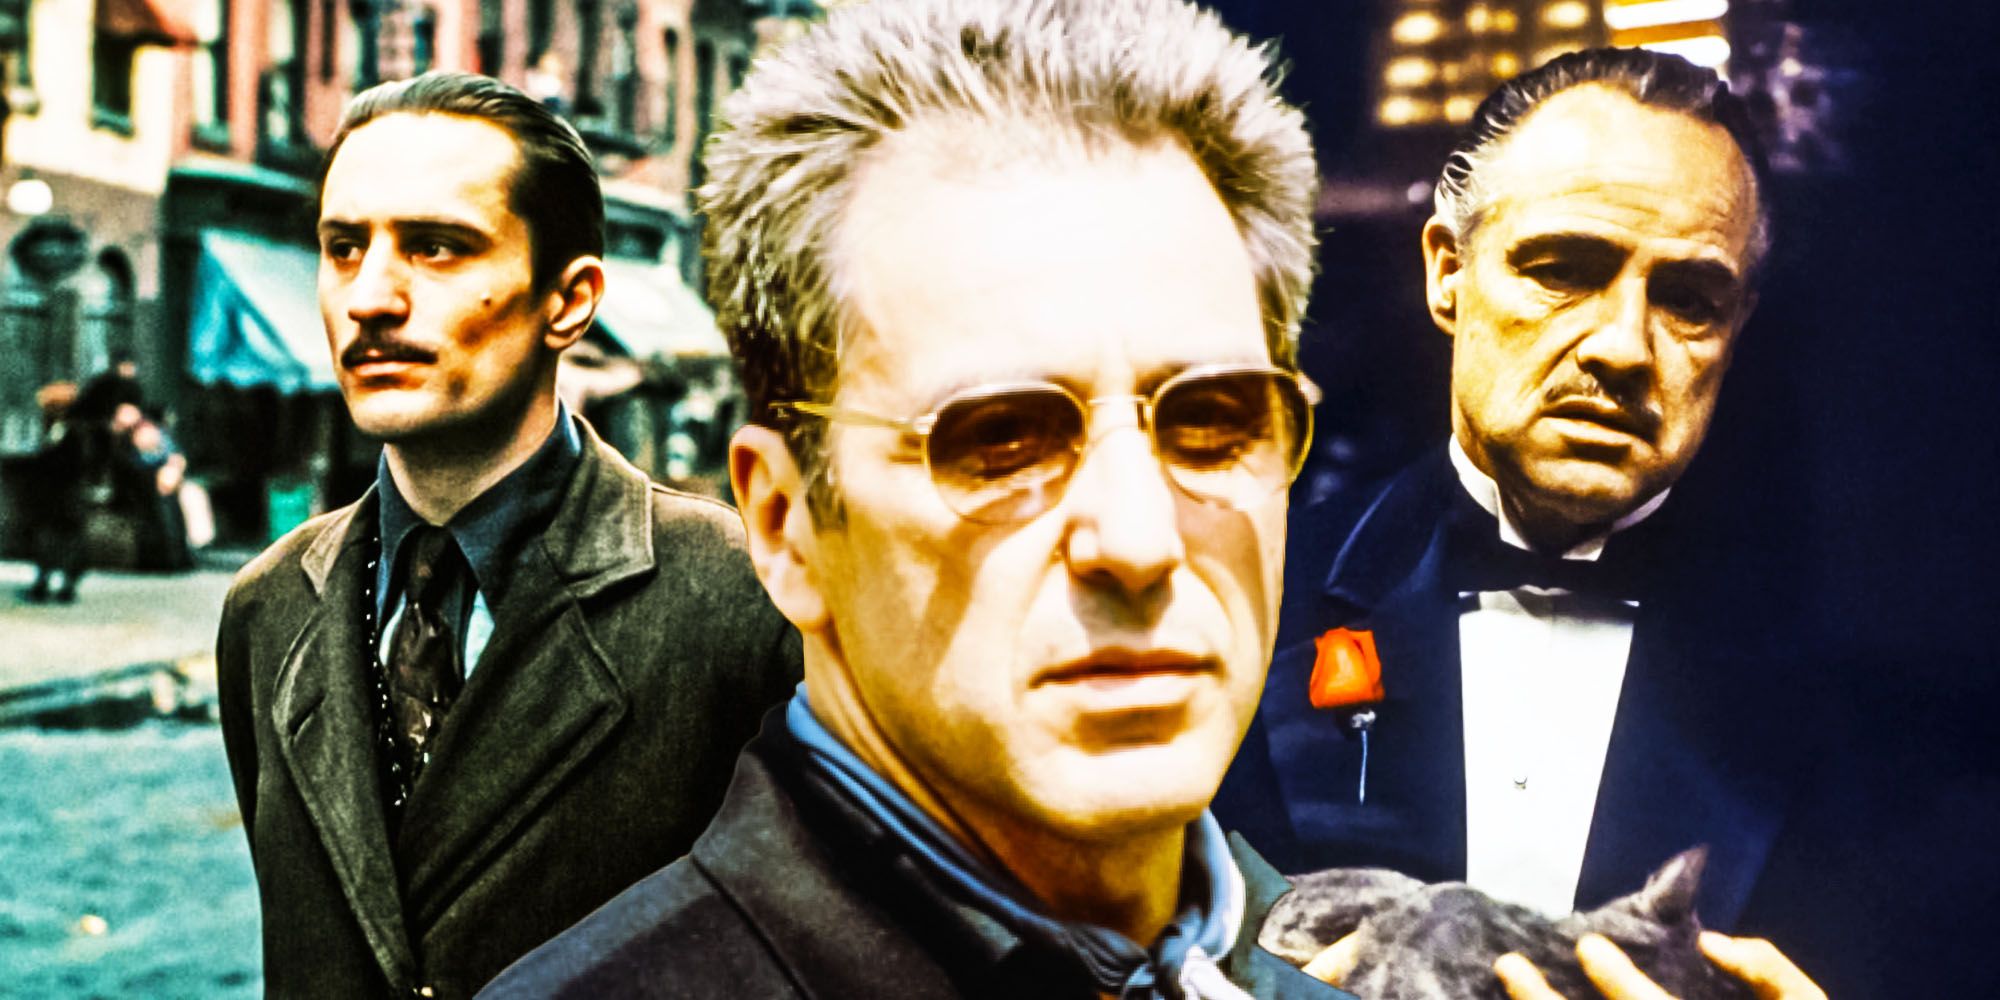 Marlon Brando, Robert de Niro, and Al Pacino in The Godfather trilogy